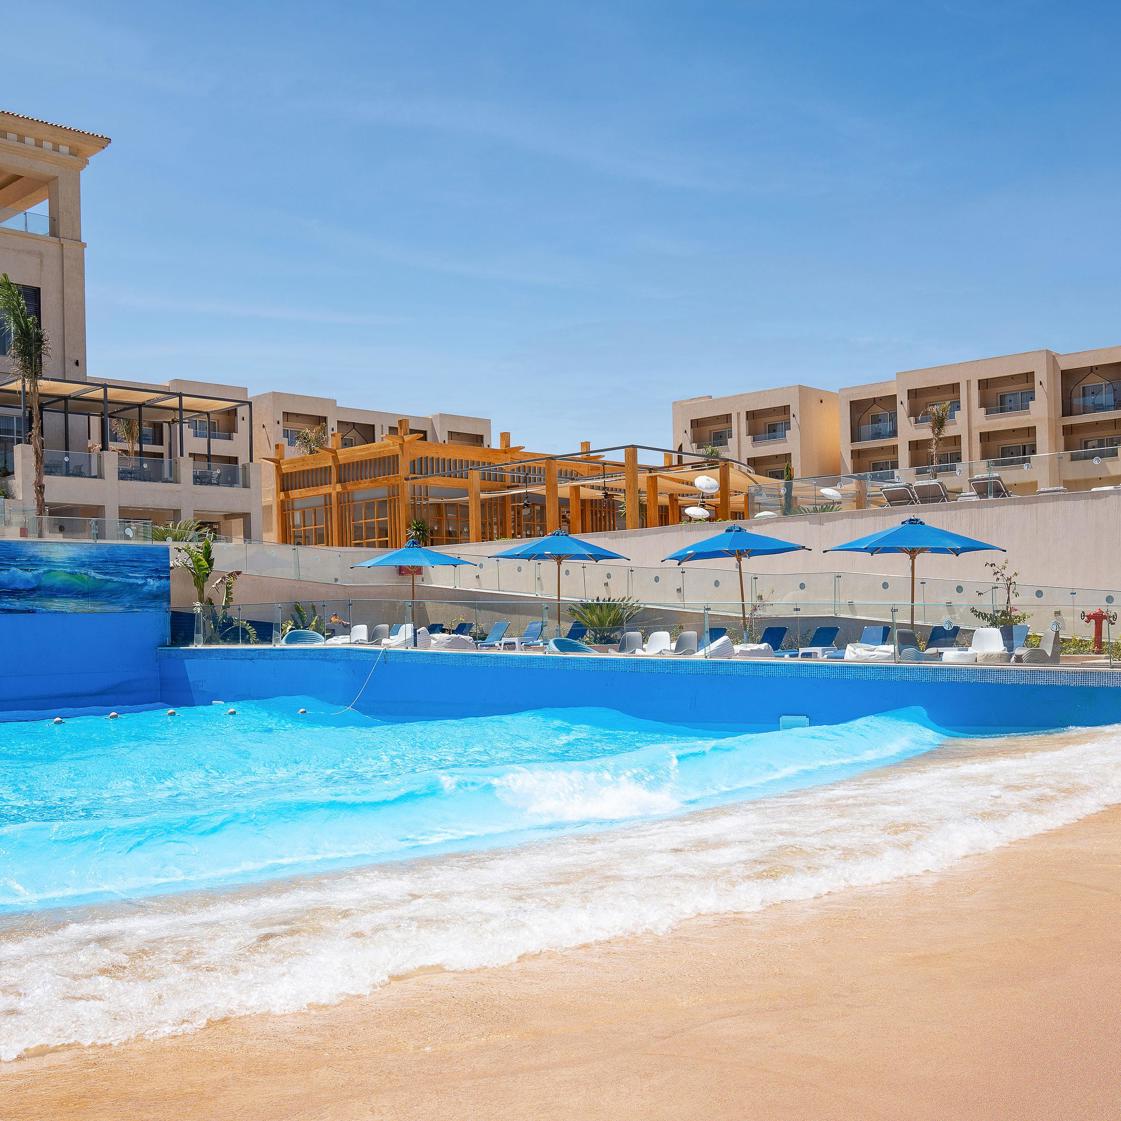 Cleopatra Luxury Resort Sharm El Sheikh - Adult Only cleopatra luxury resort makadi bay